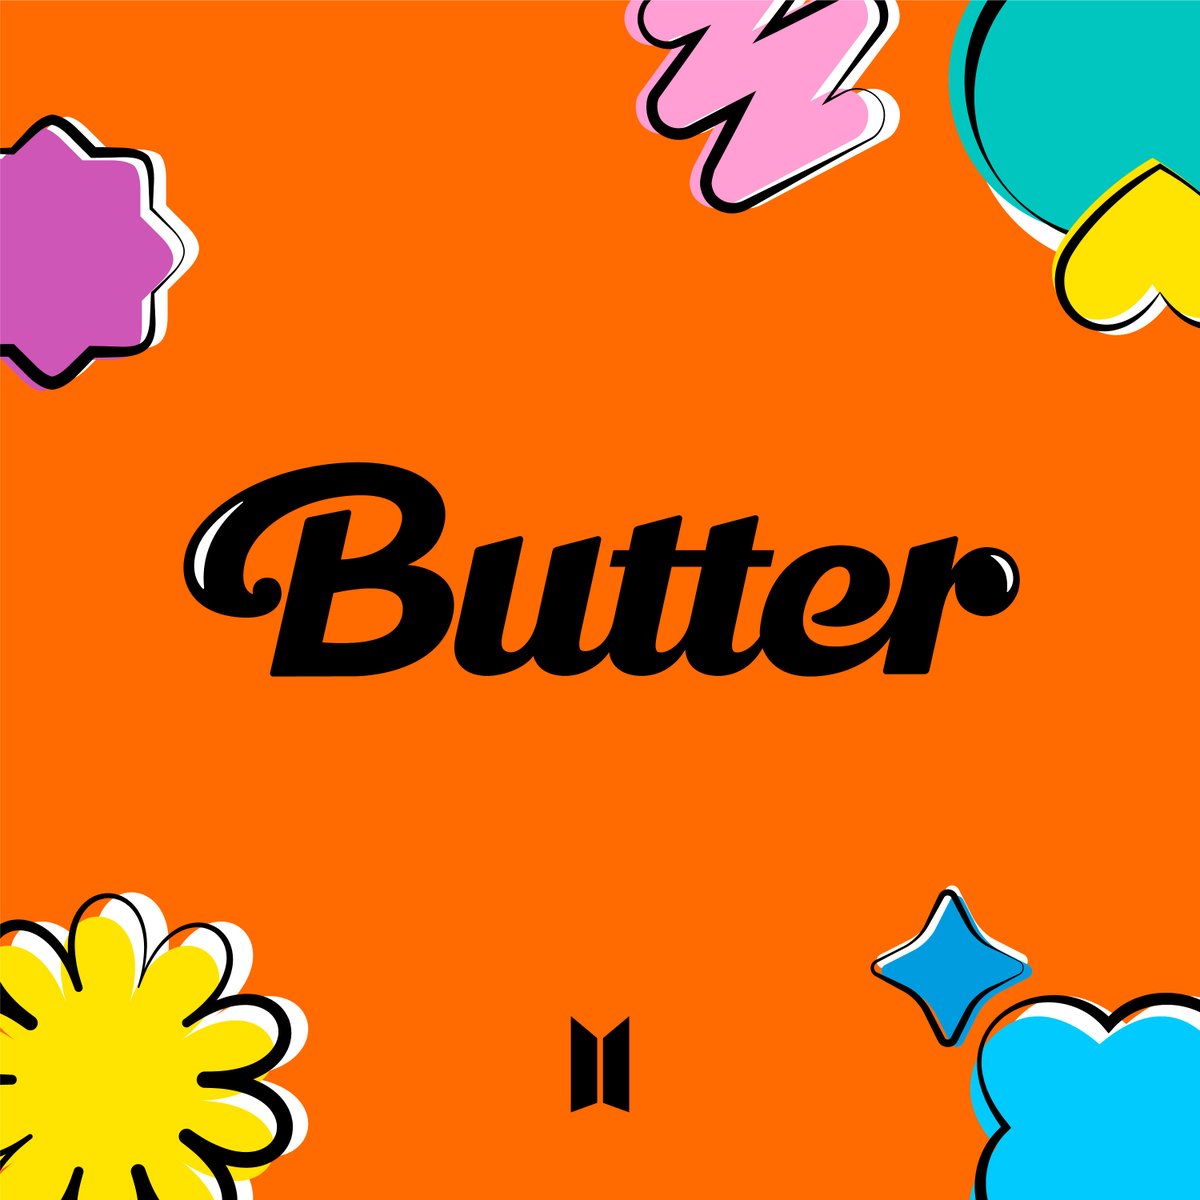 『BTS - Permission to Dance 歌詞』収録の『Butter / Permission to Dance』ジャケット